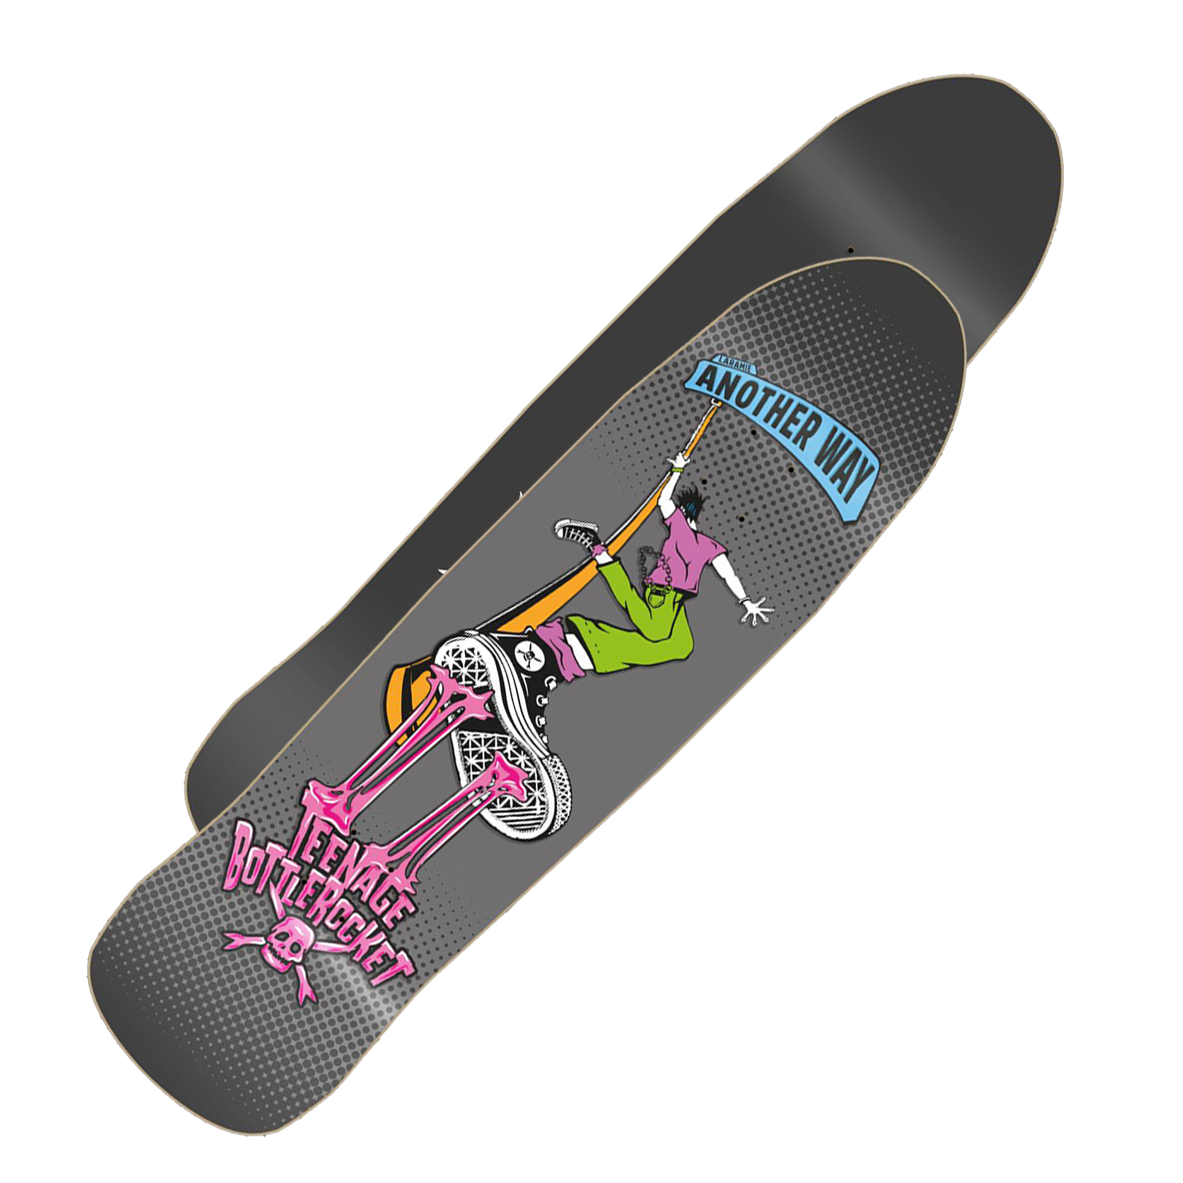 TEENAGE BOTTLEROCKET - "Another Way" (Old School Skateboard Deck)